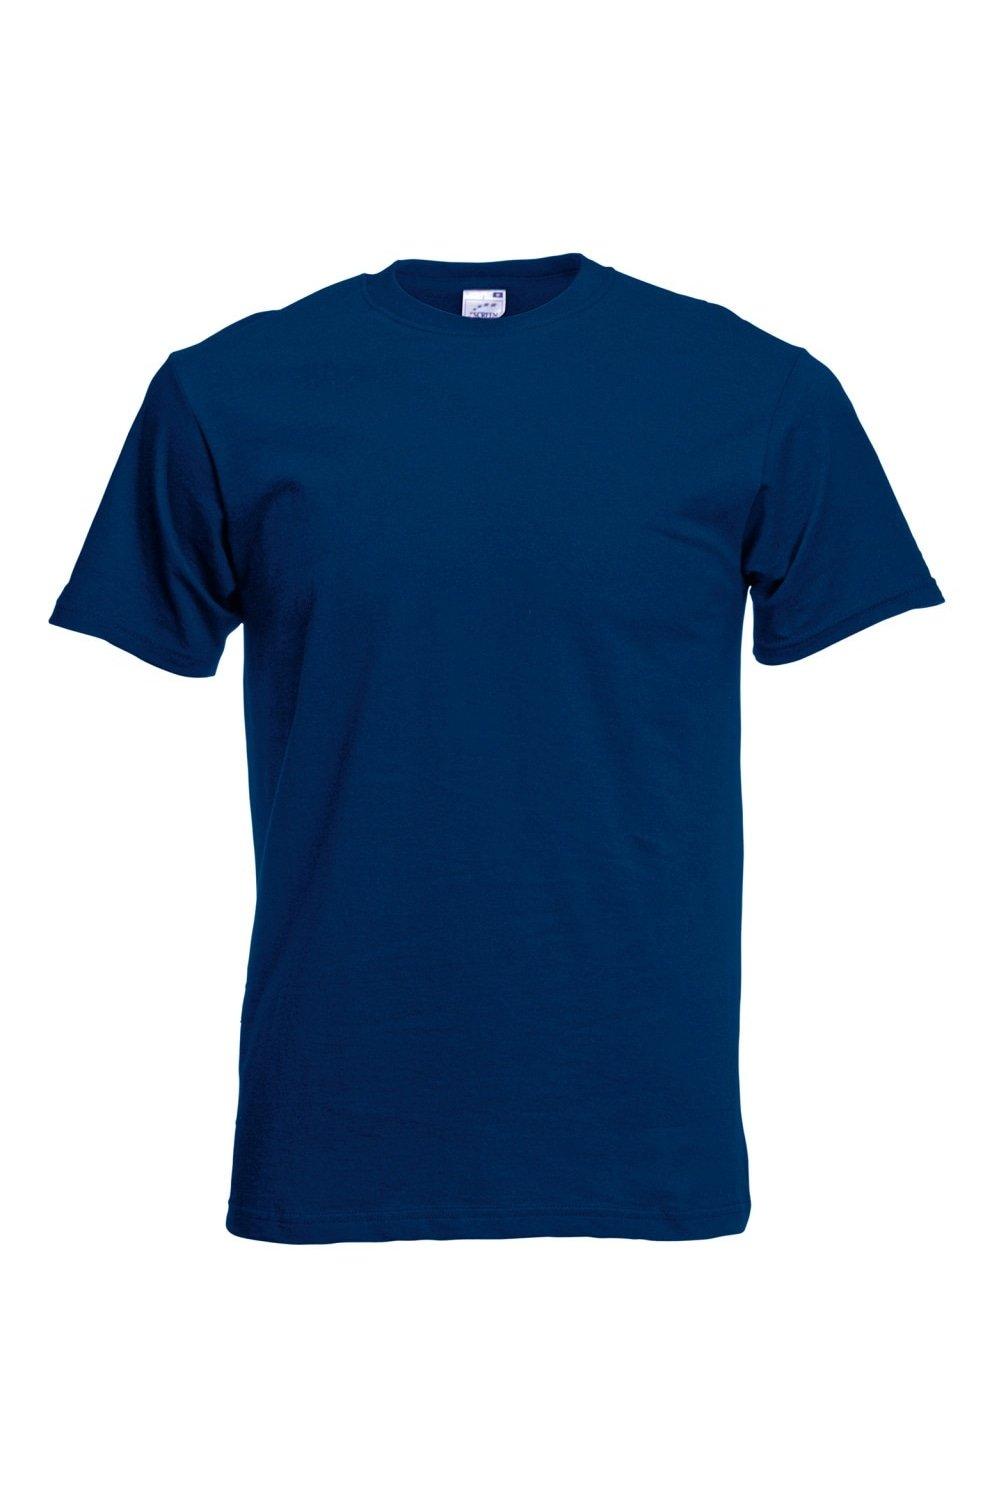 Оригинальная полноразмерная футболка Screen Stars с короткими рукавами Fruit of the Loom, темно-синий